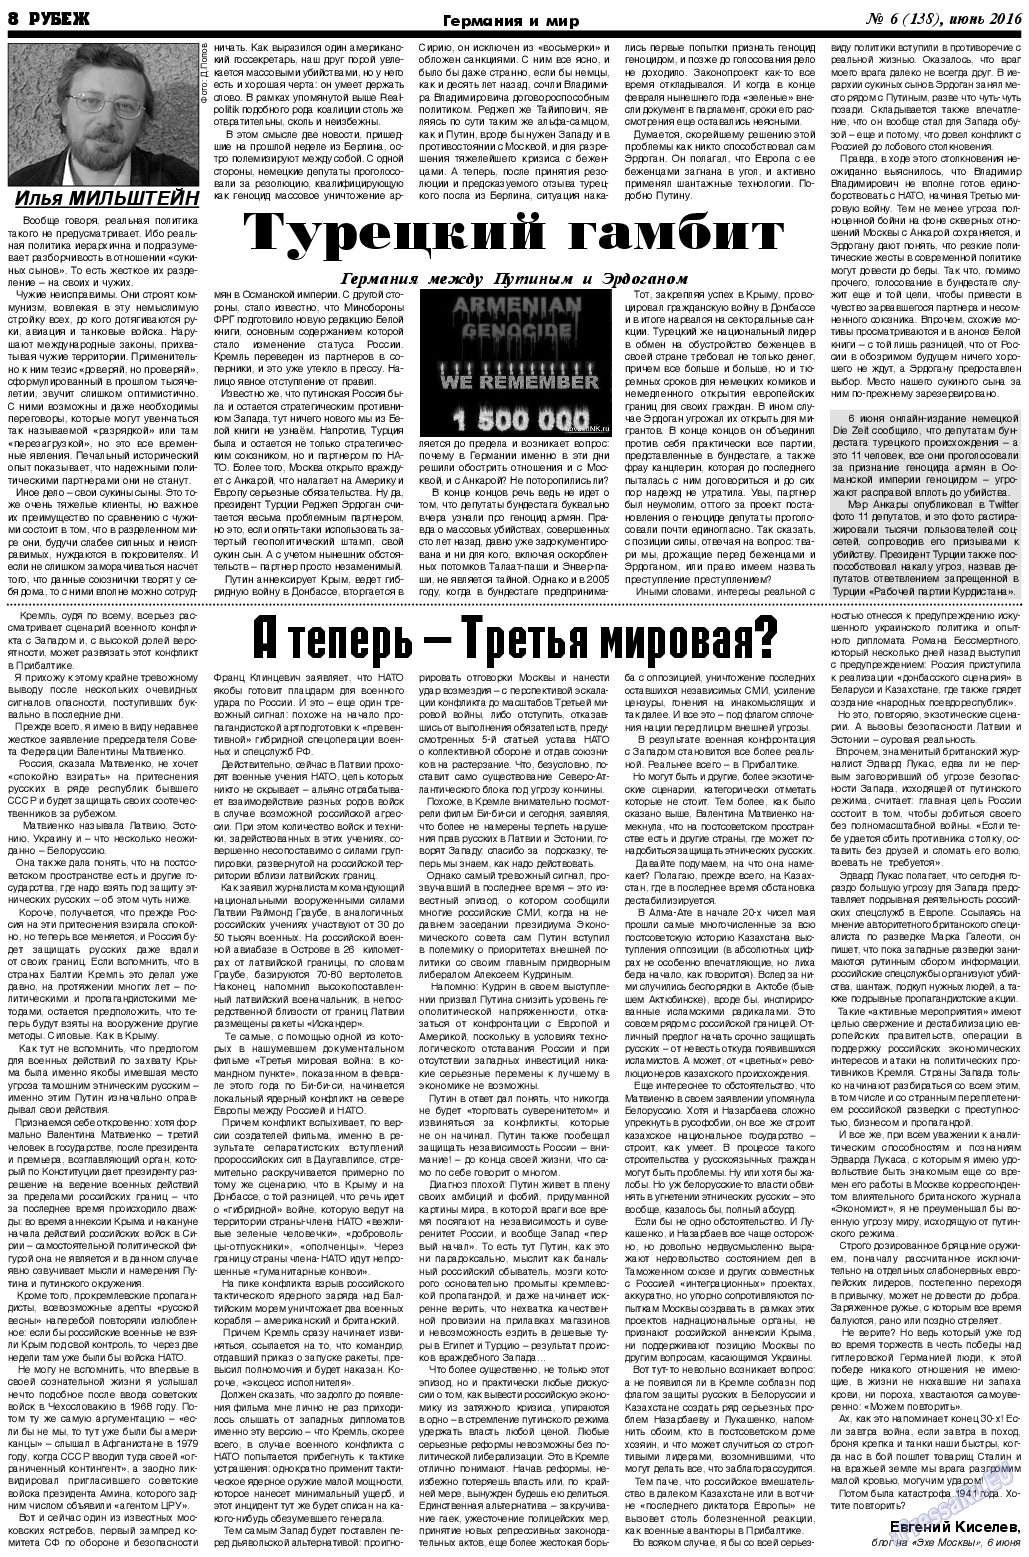 Рубеж, газета. 2016 №6 стр.8